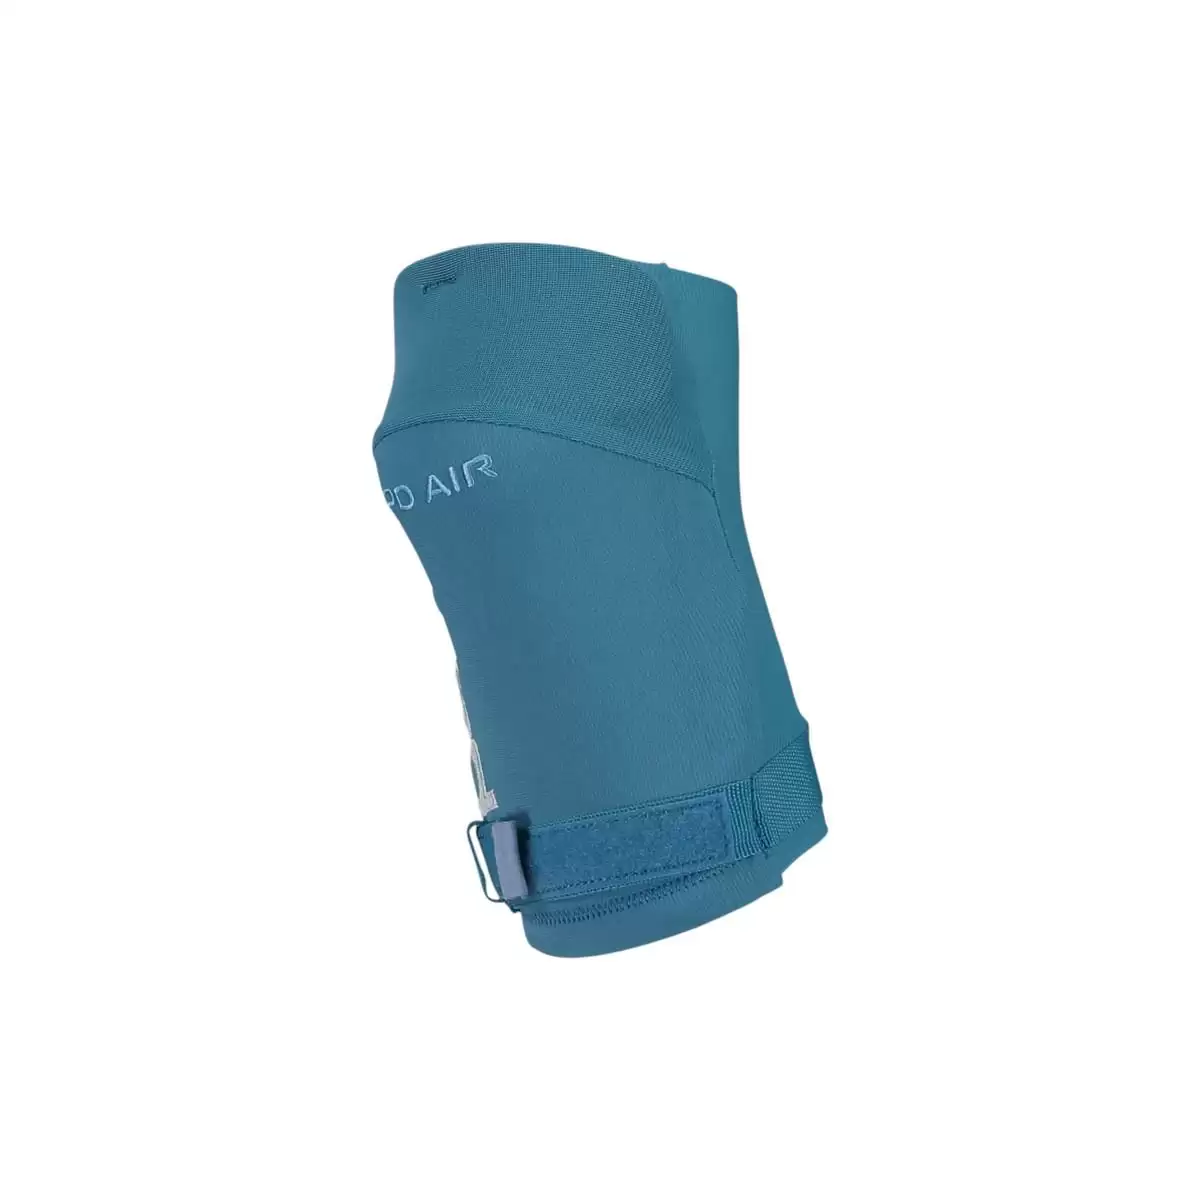 Joint VPD Air Elbow Protectors Basalt Blue Size XS #1